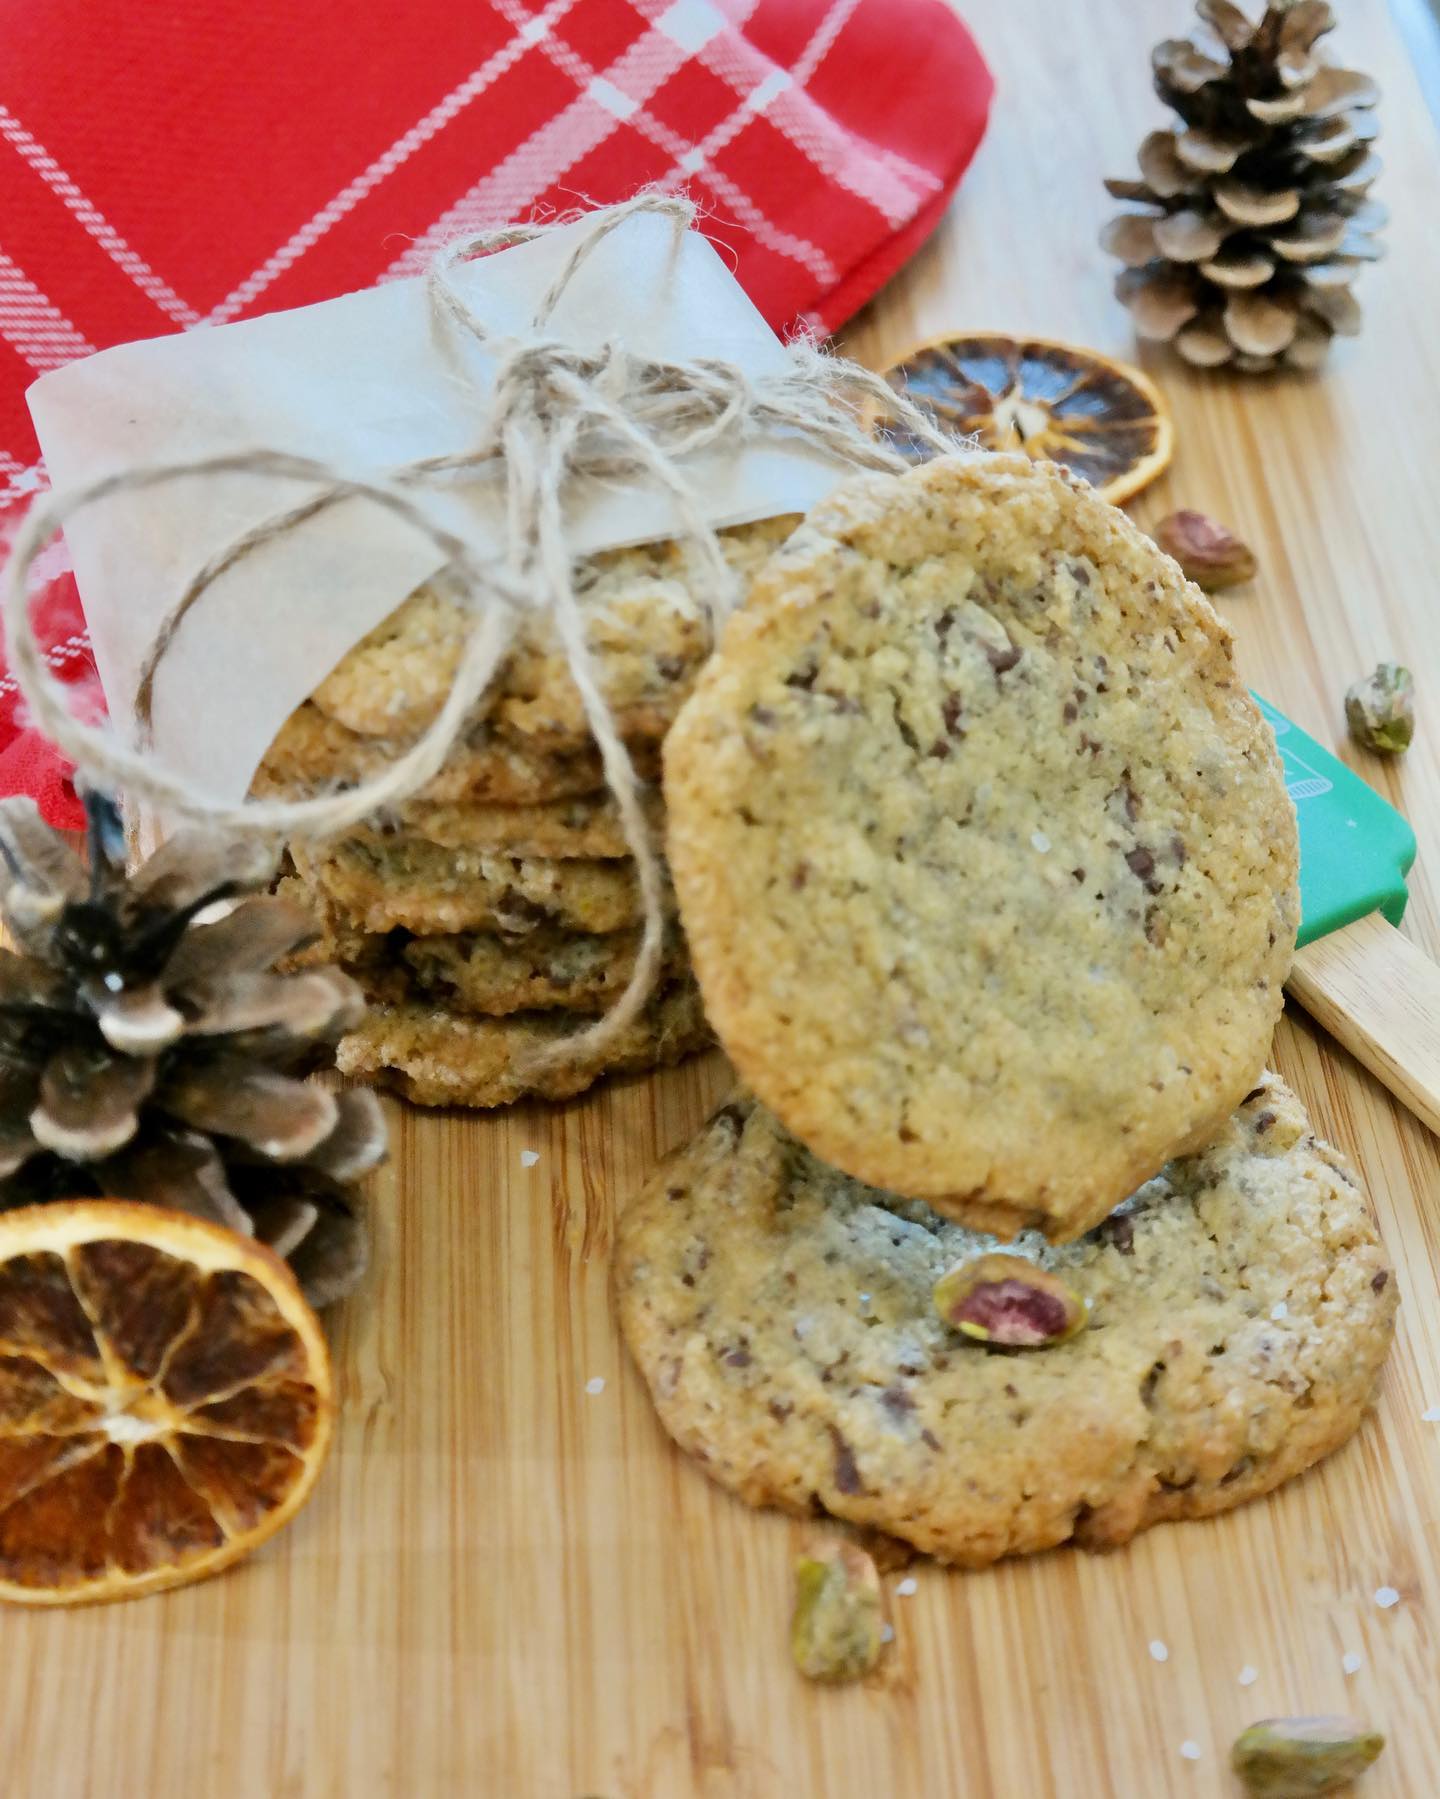 Christmas baking 👩‍🍳Pistachio and chocolate chip cookies 🍪🍪🍪
.
.
.
.
#bake #baking #homebaking #homebaker #homebaked #chocolate #chocolatechipcookies #christmas #christmasbaking #cookies #bakersgonnabake #bakerenthusiast #instagood #food #dessert #foodblog #foodblogger #bakinglove #ilovebaking